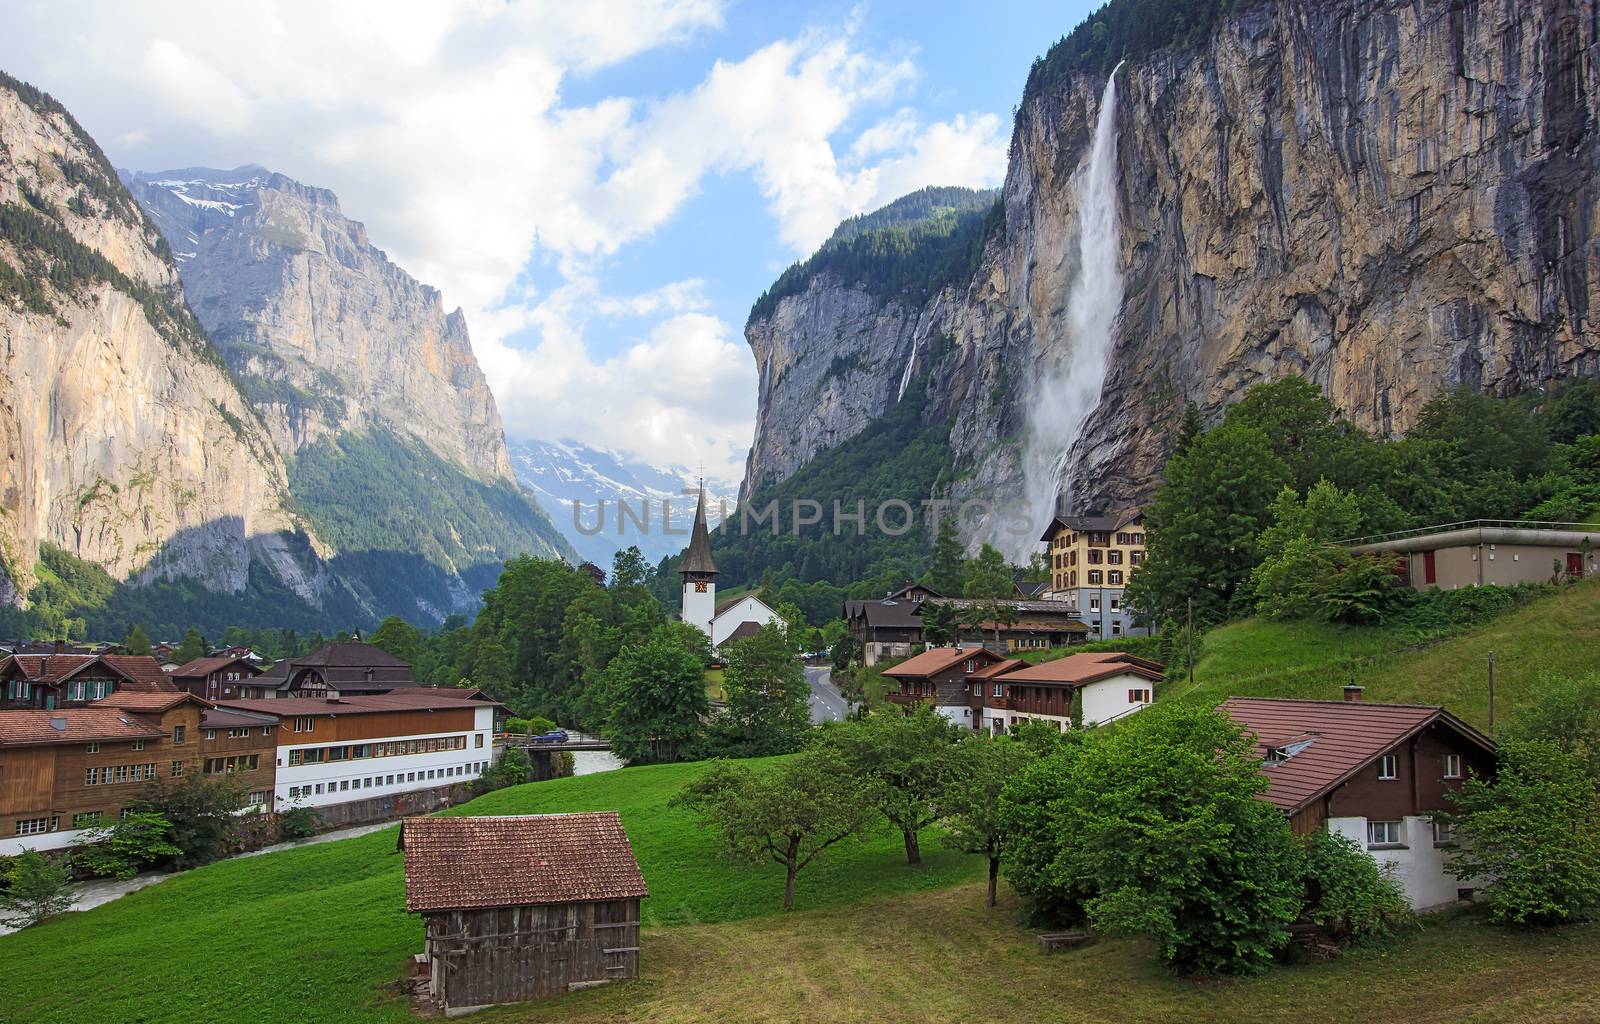 Beautiful Staubbachfall waterfall flowing down the picturesque Lauterbrunnen valley and village in Bern canton, Switzerland, Europe